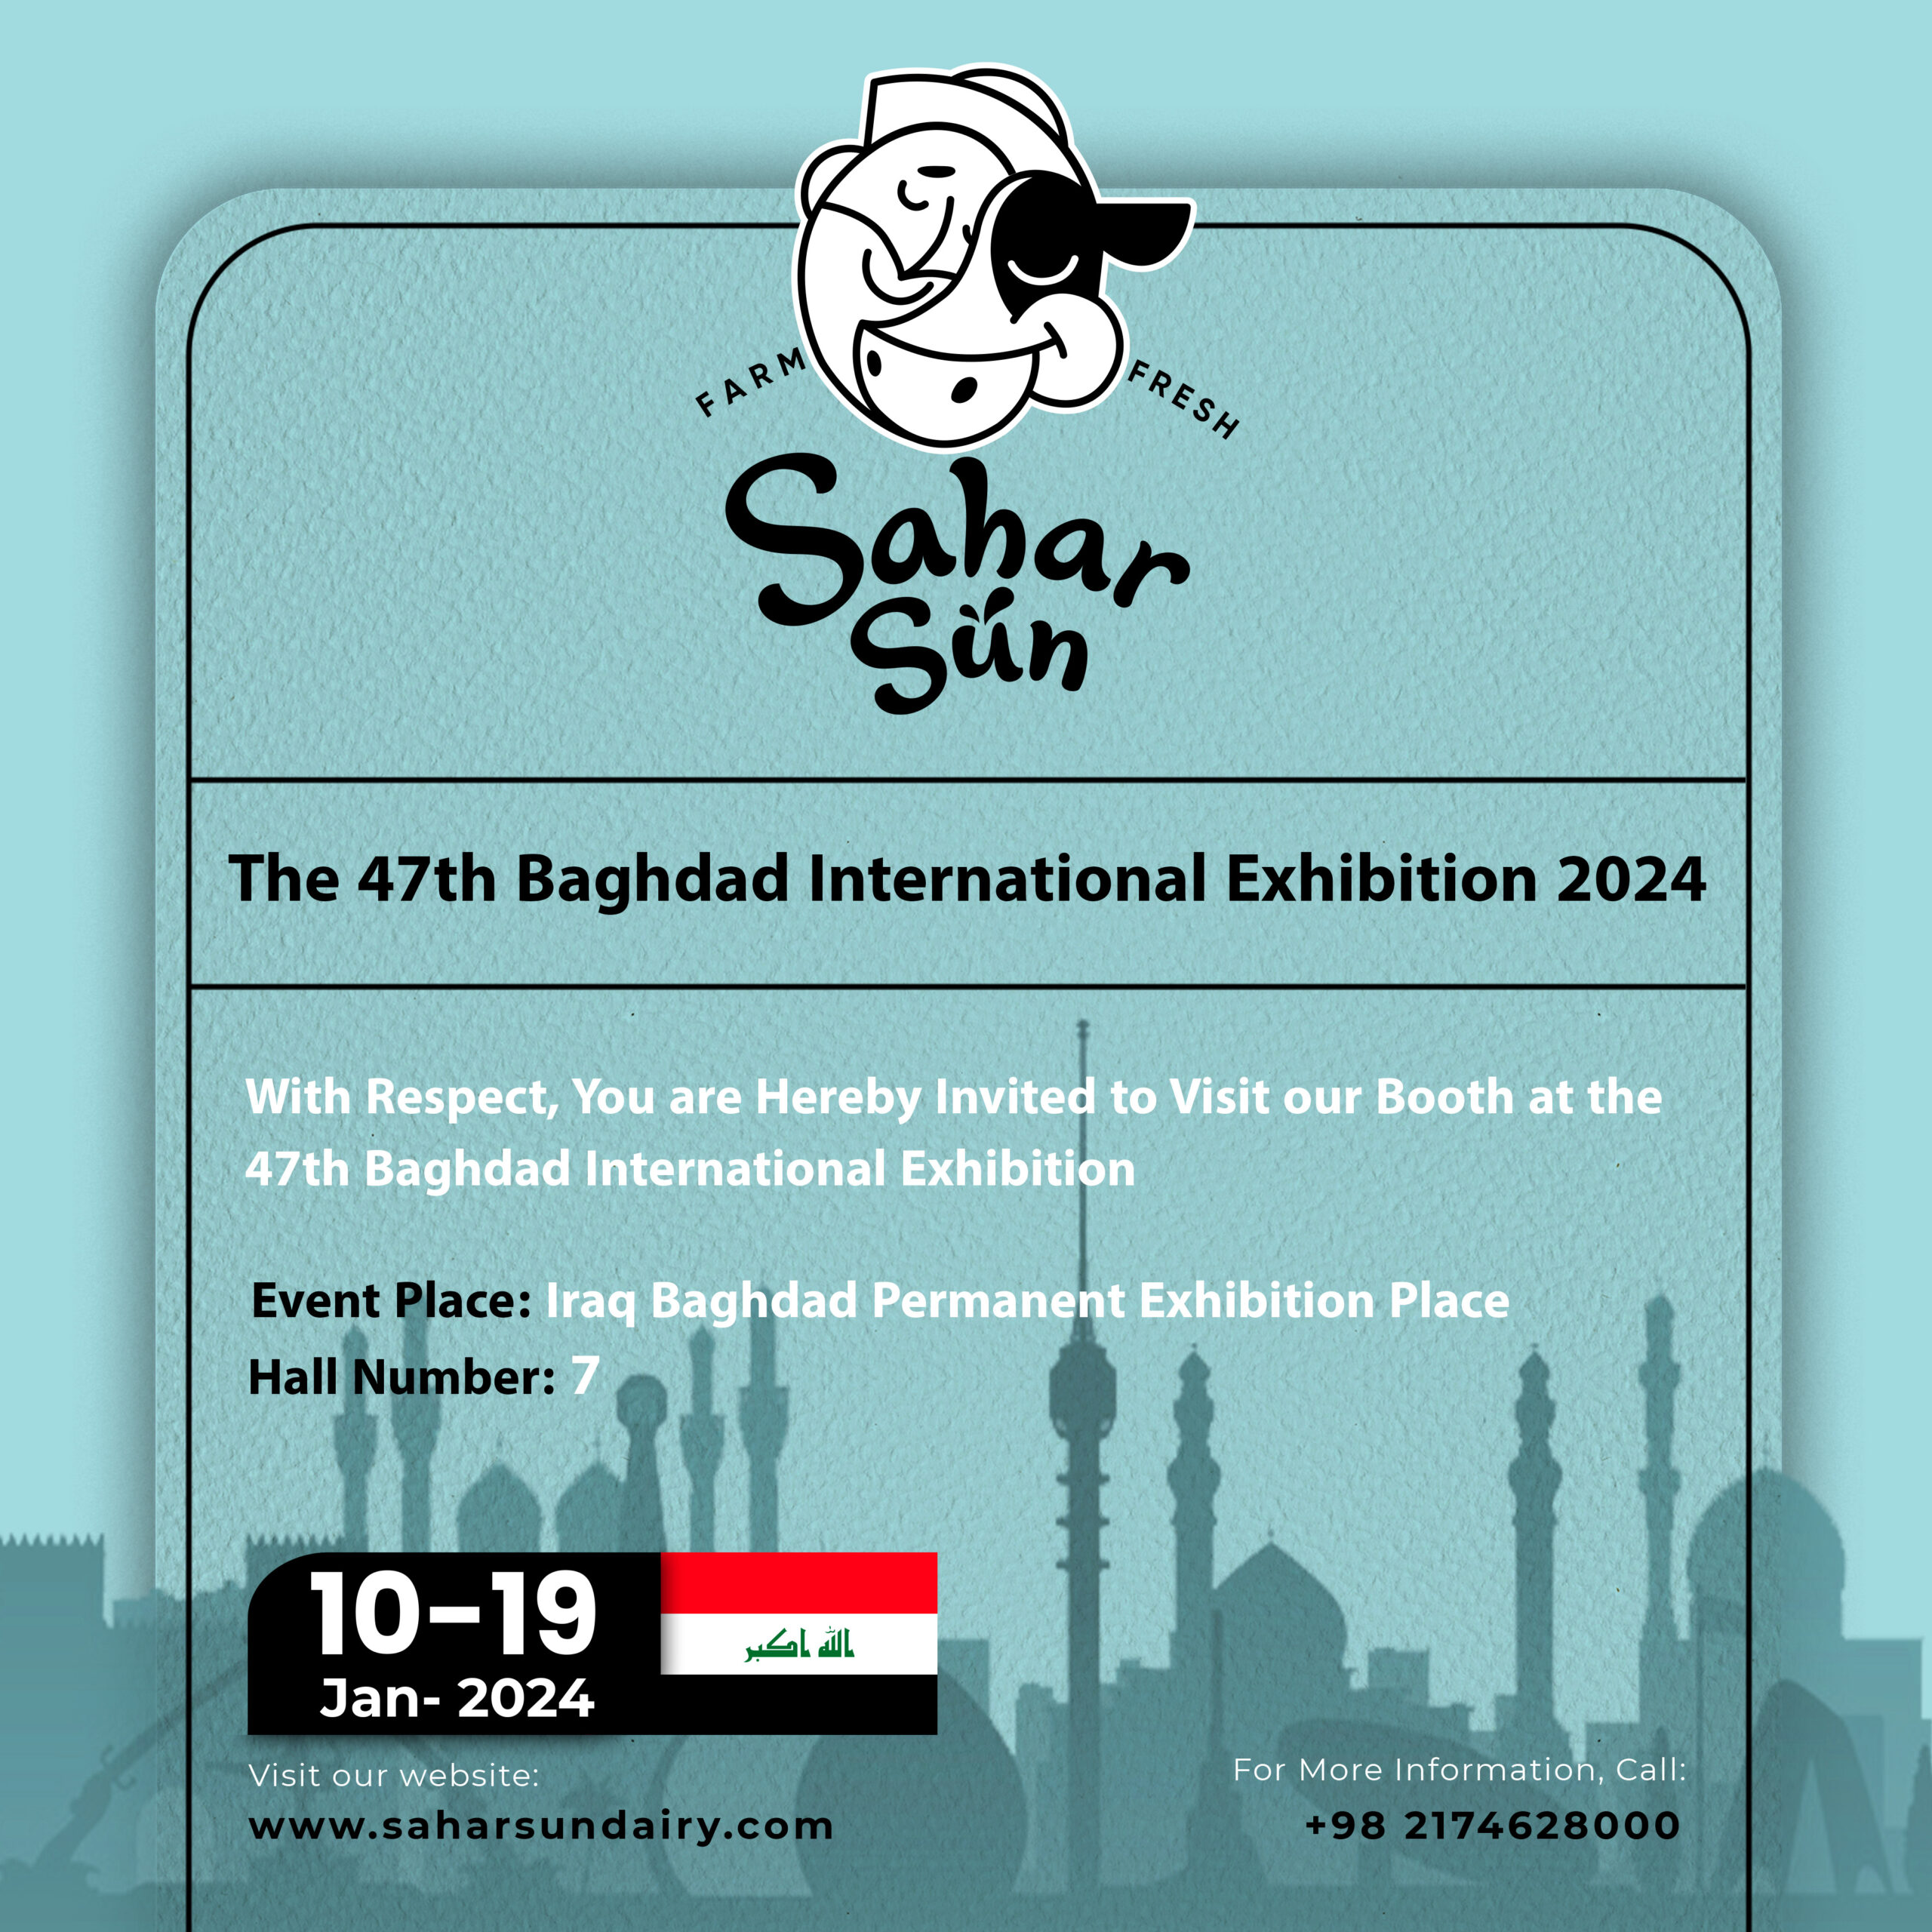 The 47th Baghdad International Exhibition 2024